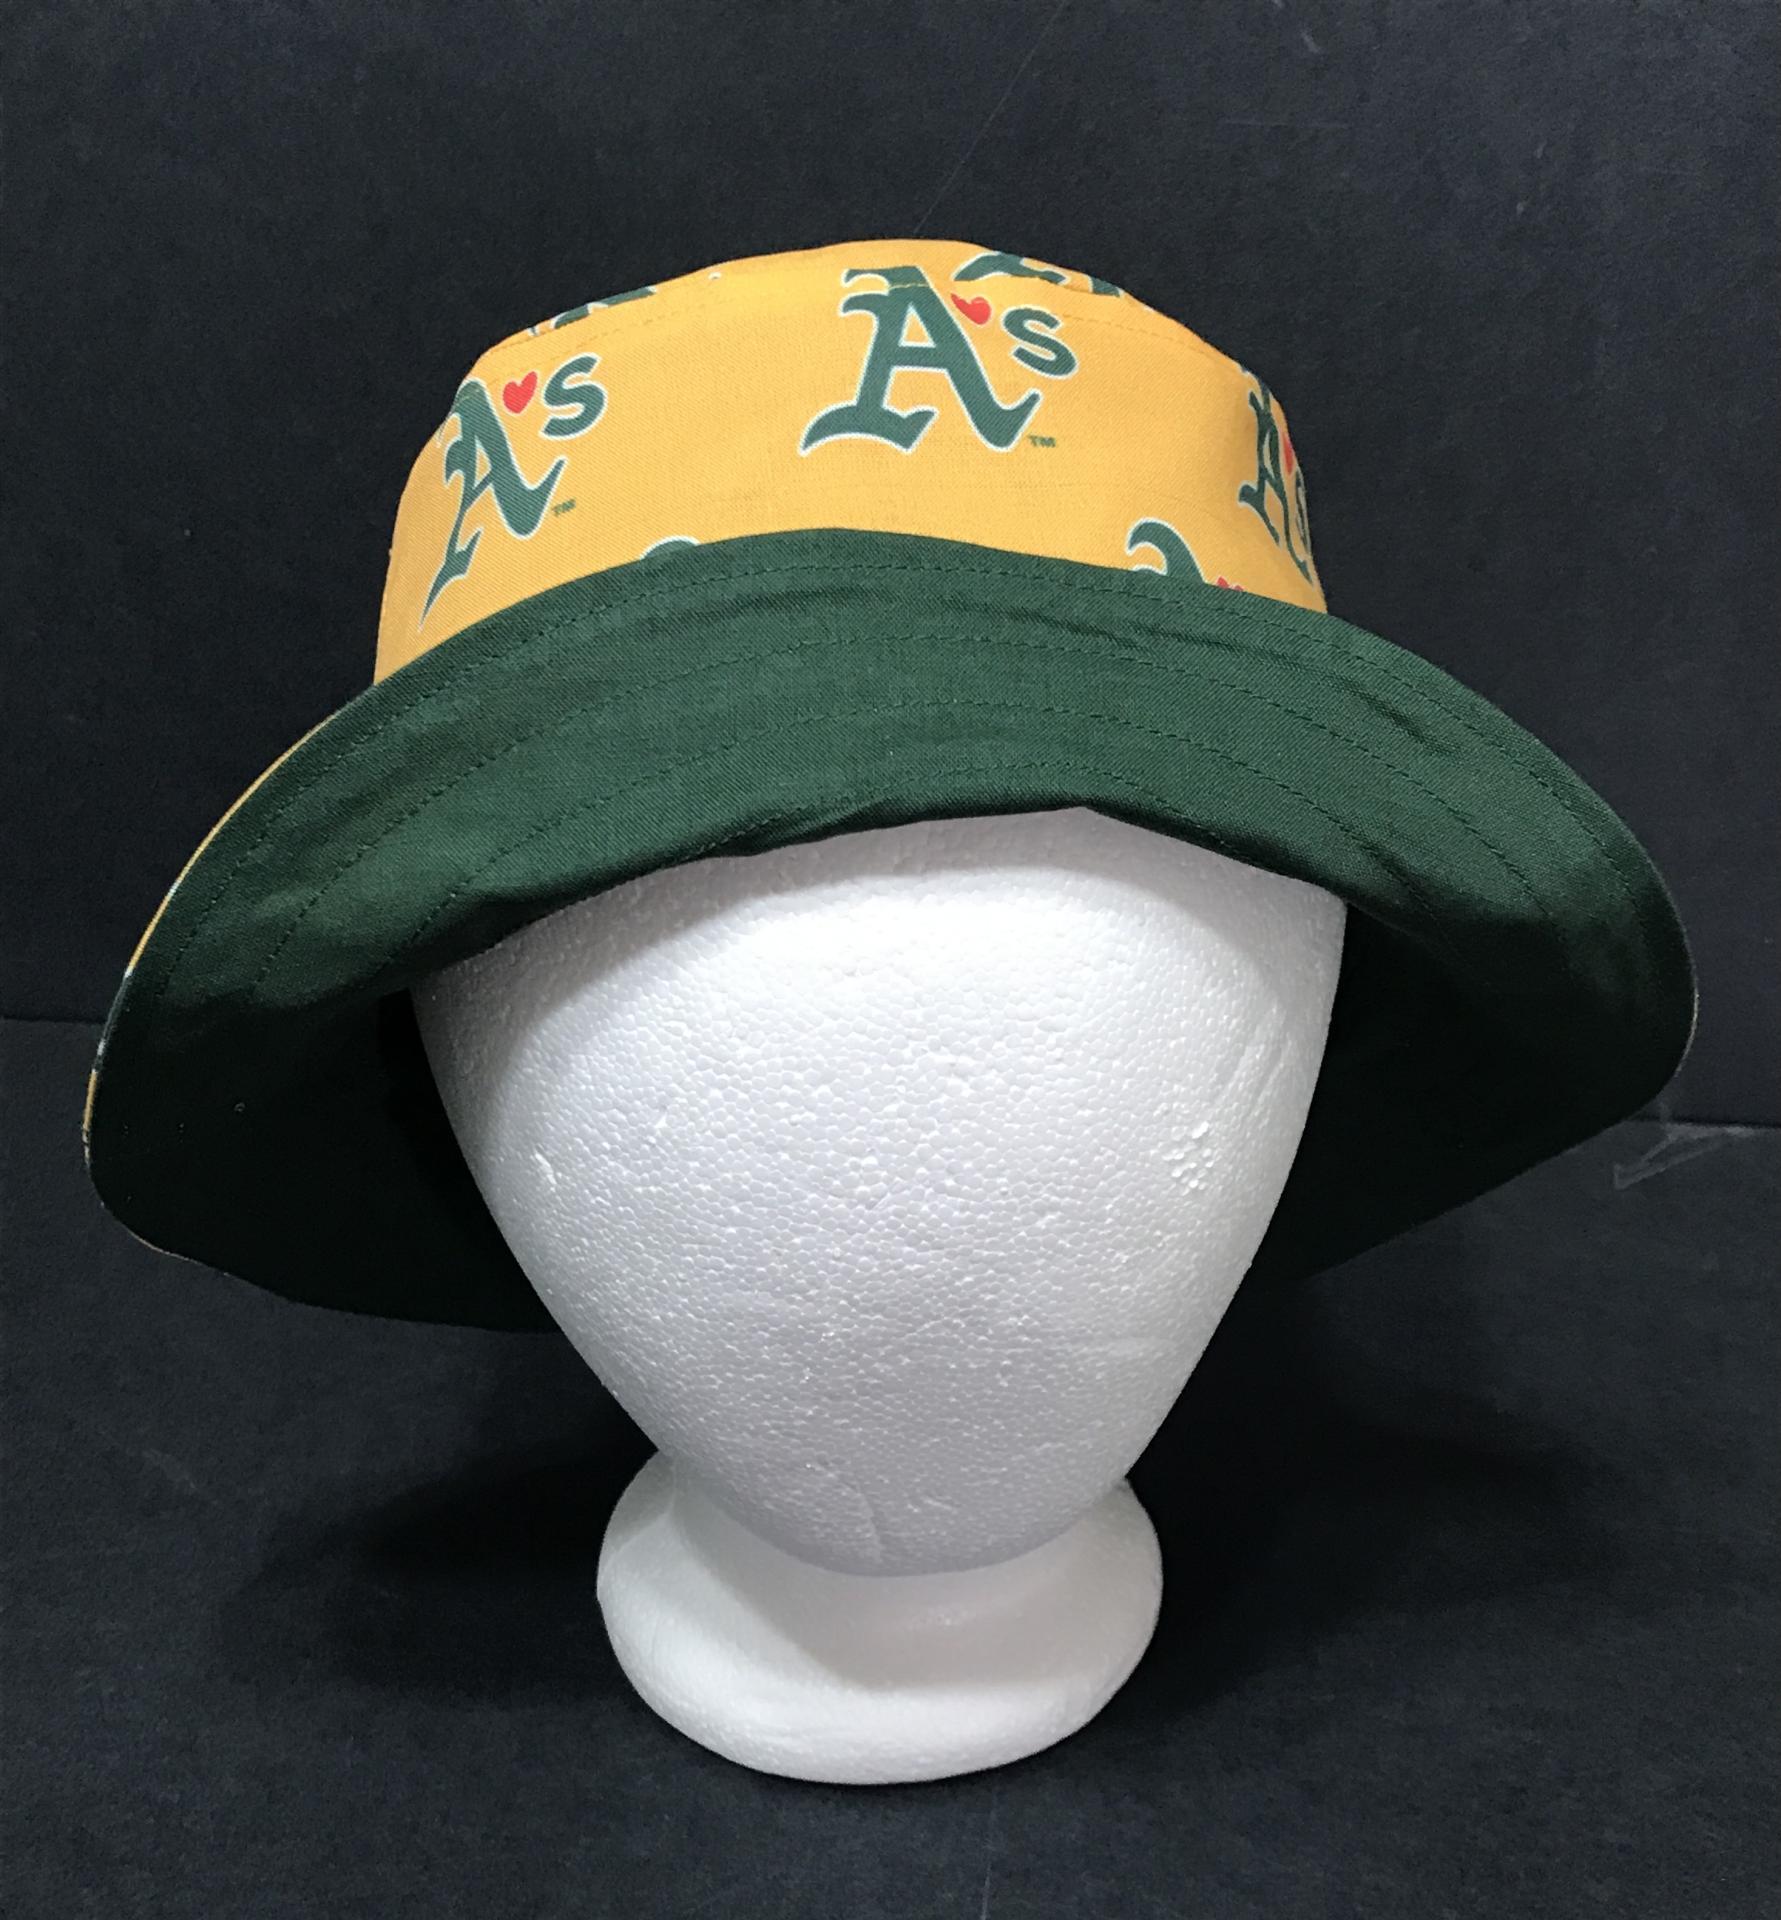 Oakland A’s Theme Bucket Hat, Golden Yellow, Reversible, Unisex Sizes S-XXL, cotton, fishing hat, sun hat, floppy hat, adults or older children